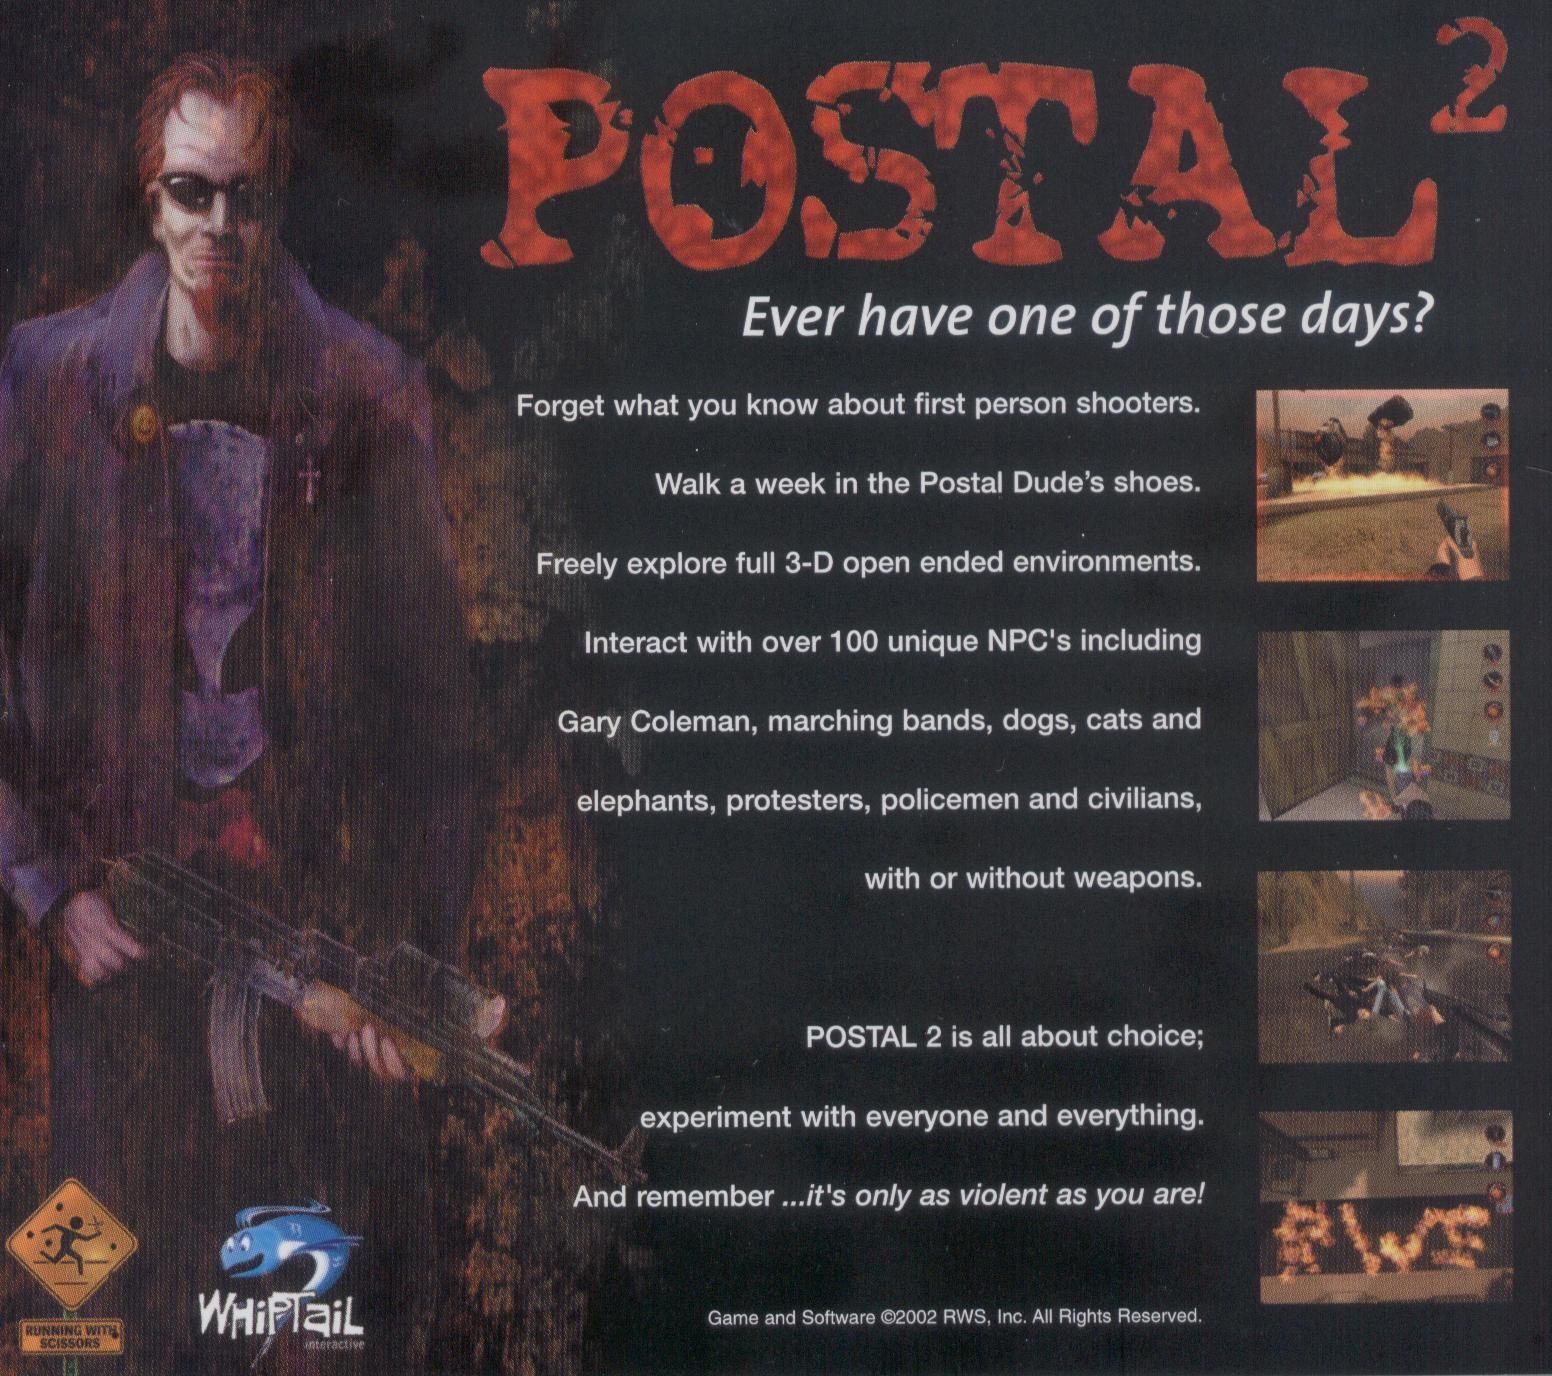 Postal 2 awp delete review скачать с торрента фото 44